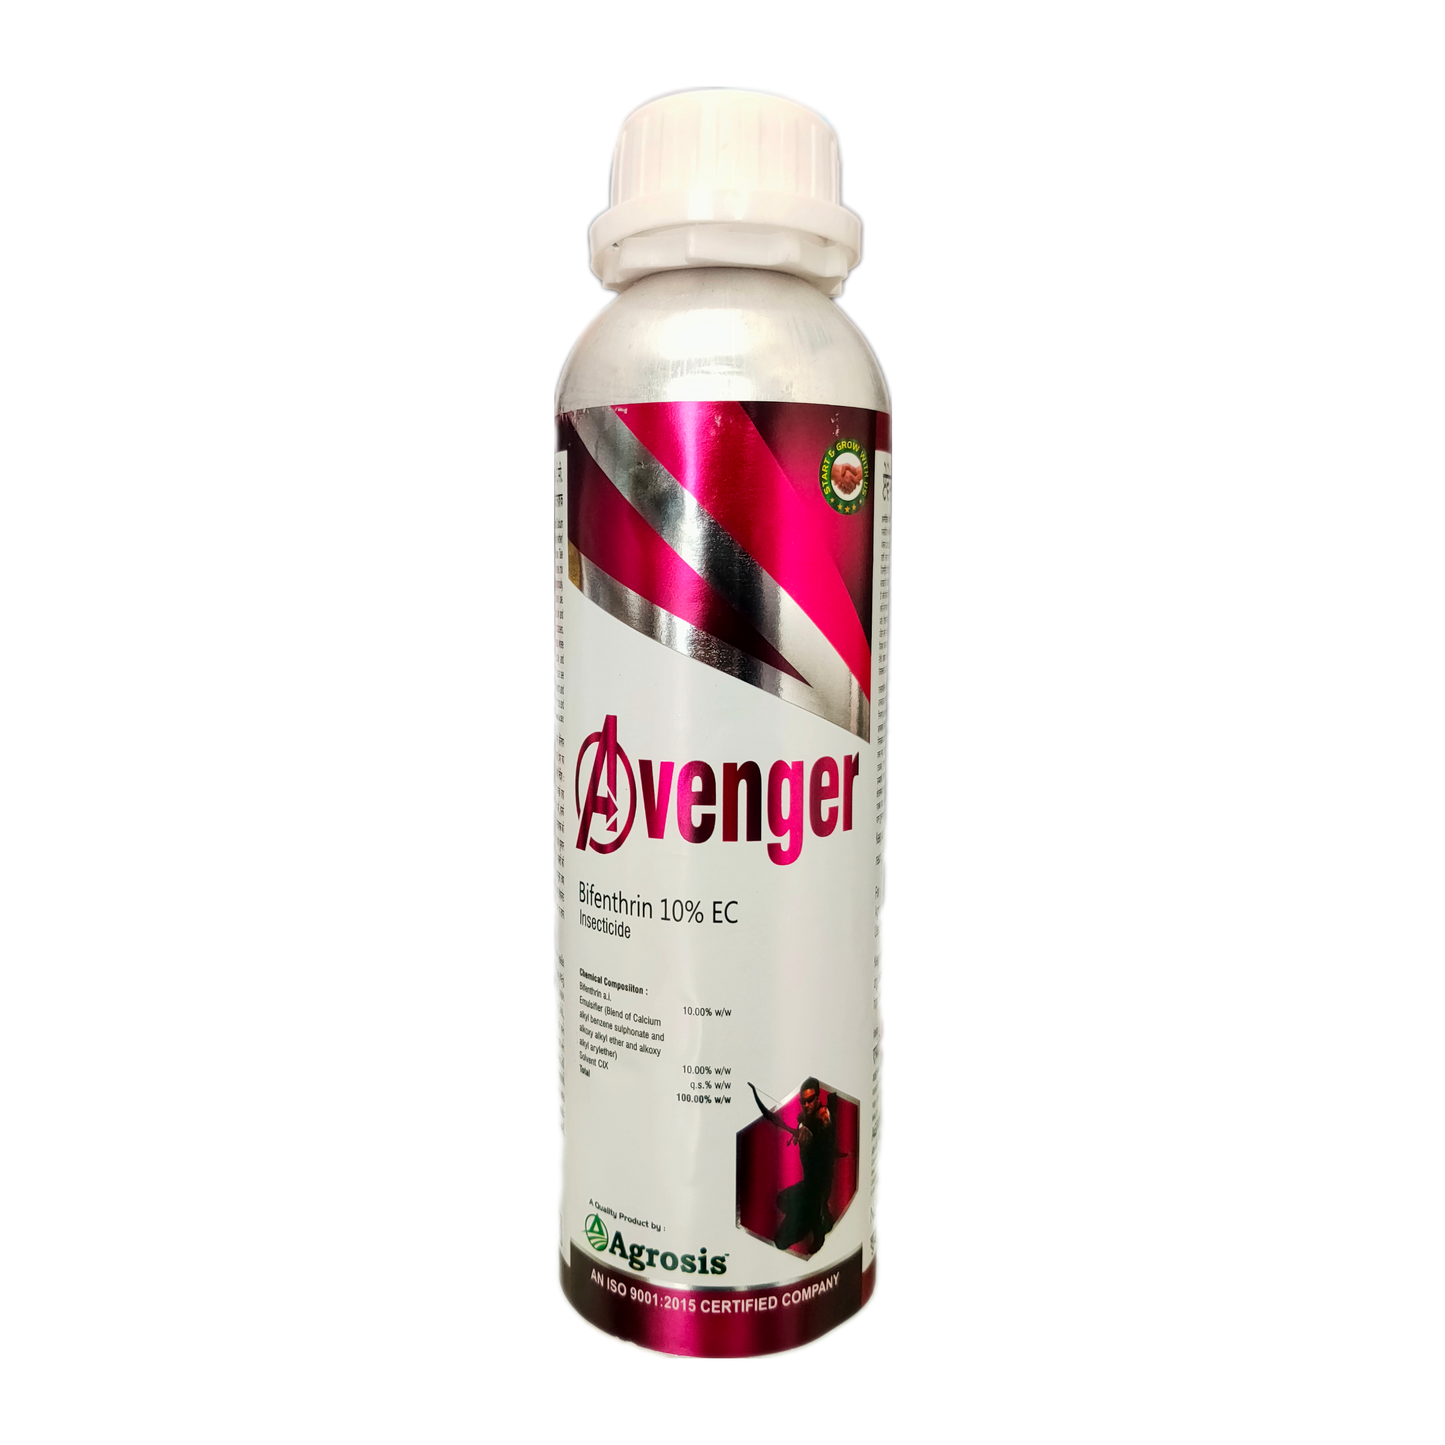 Avenger - Bifenthrin 10% EC Insecticide